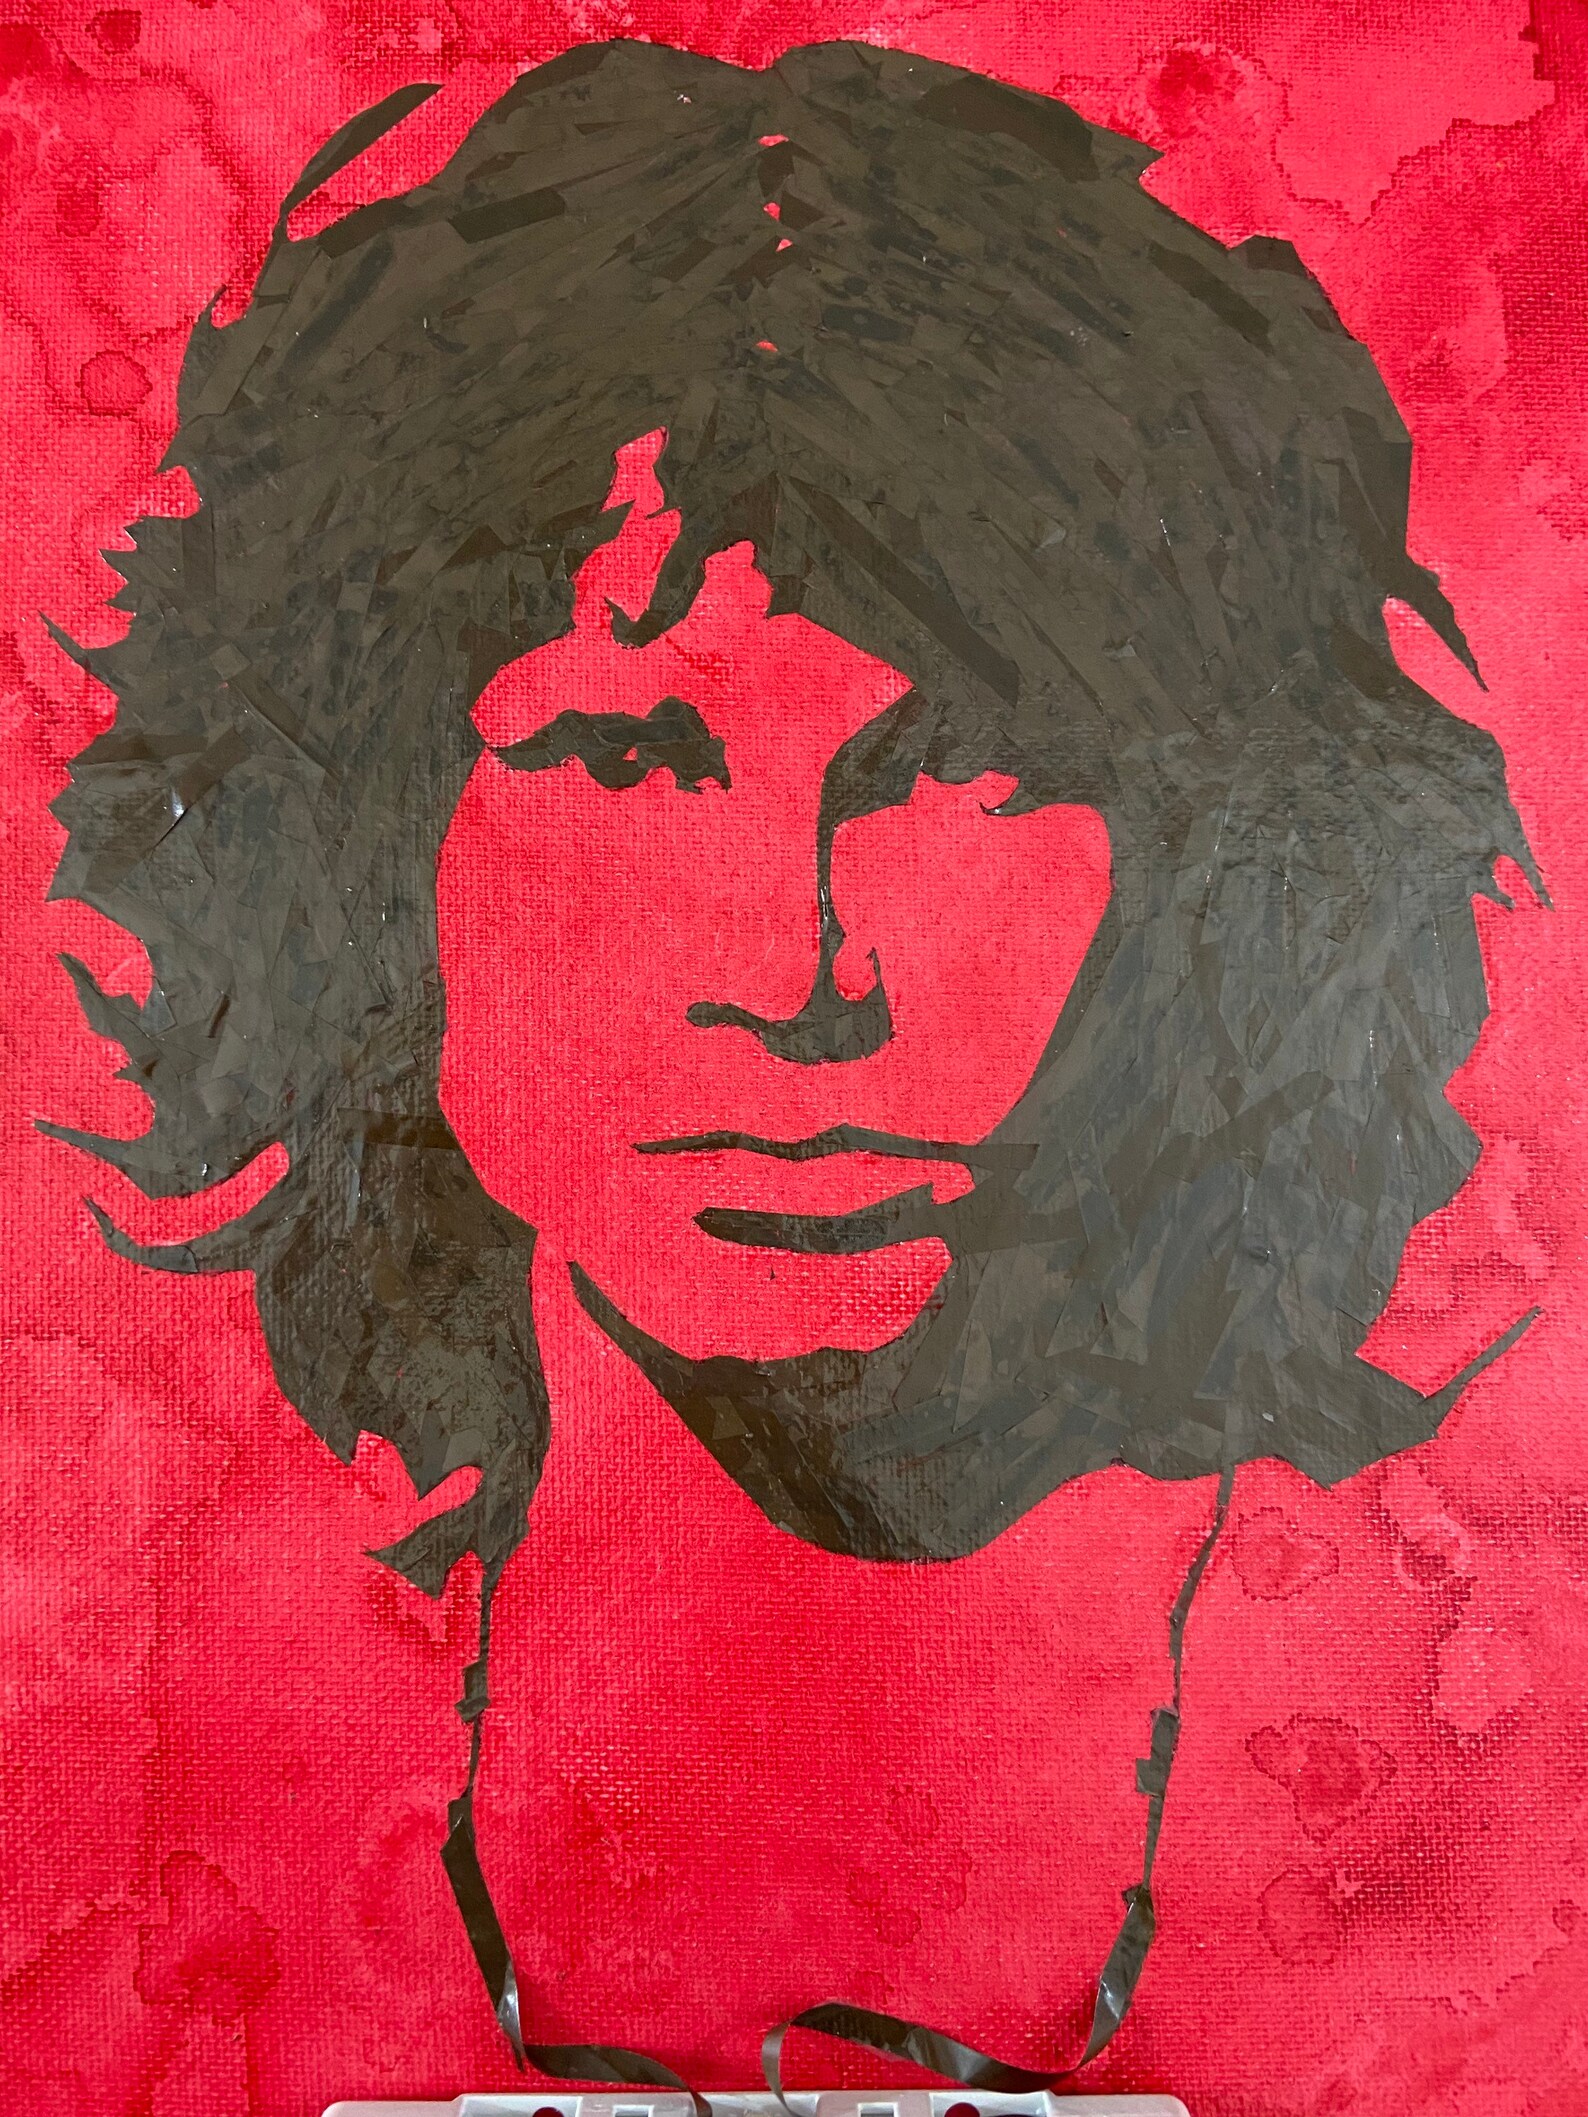 Jim Morrison Cassette Portrait Red Canvas Panel Painting with | Etsy